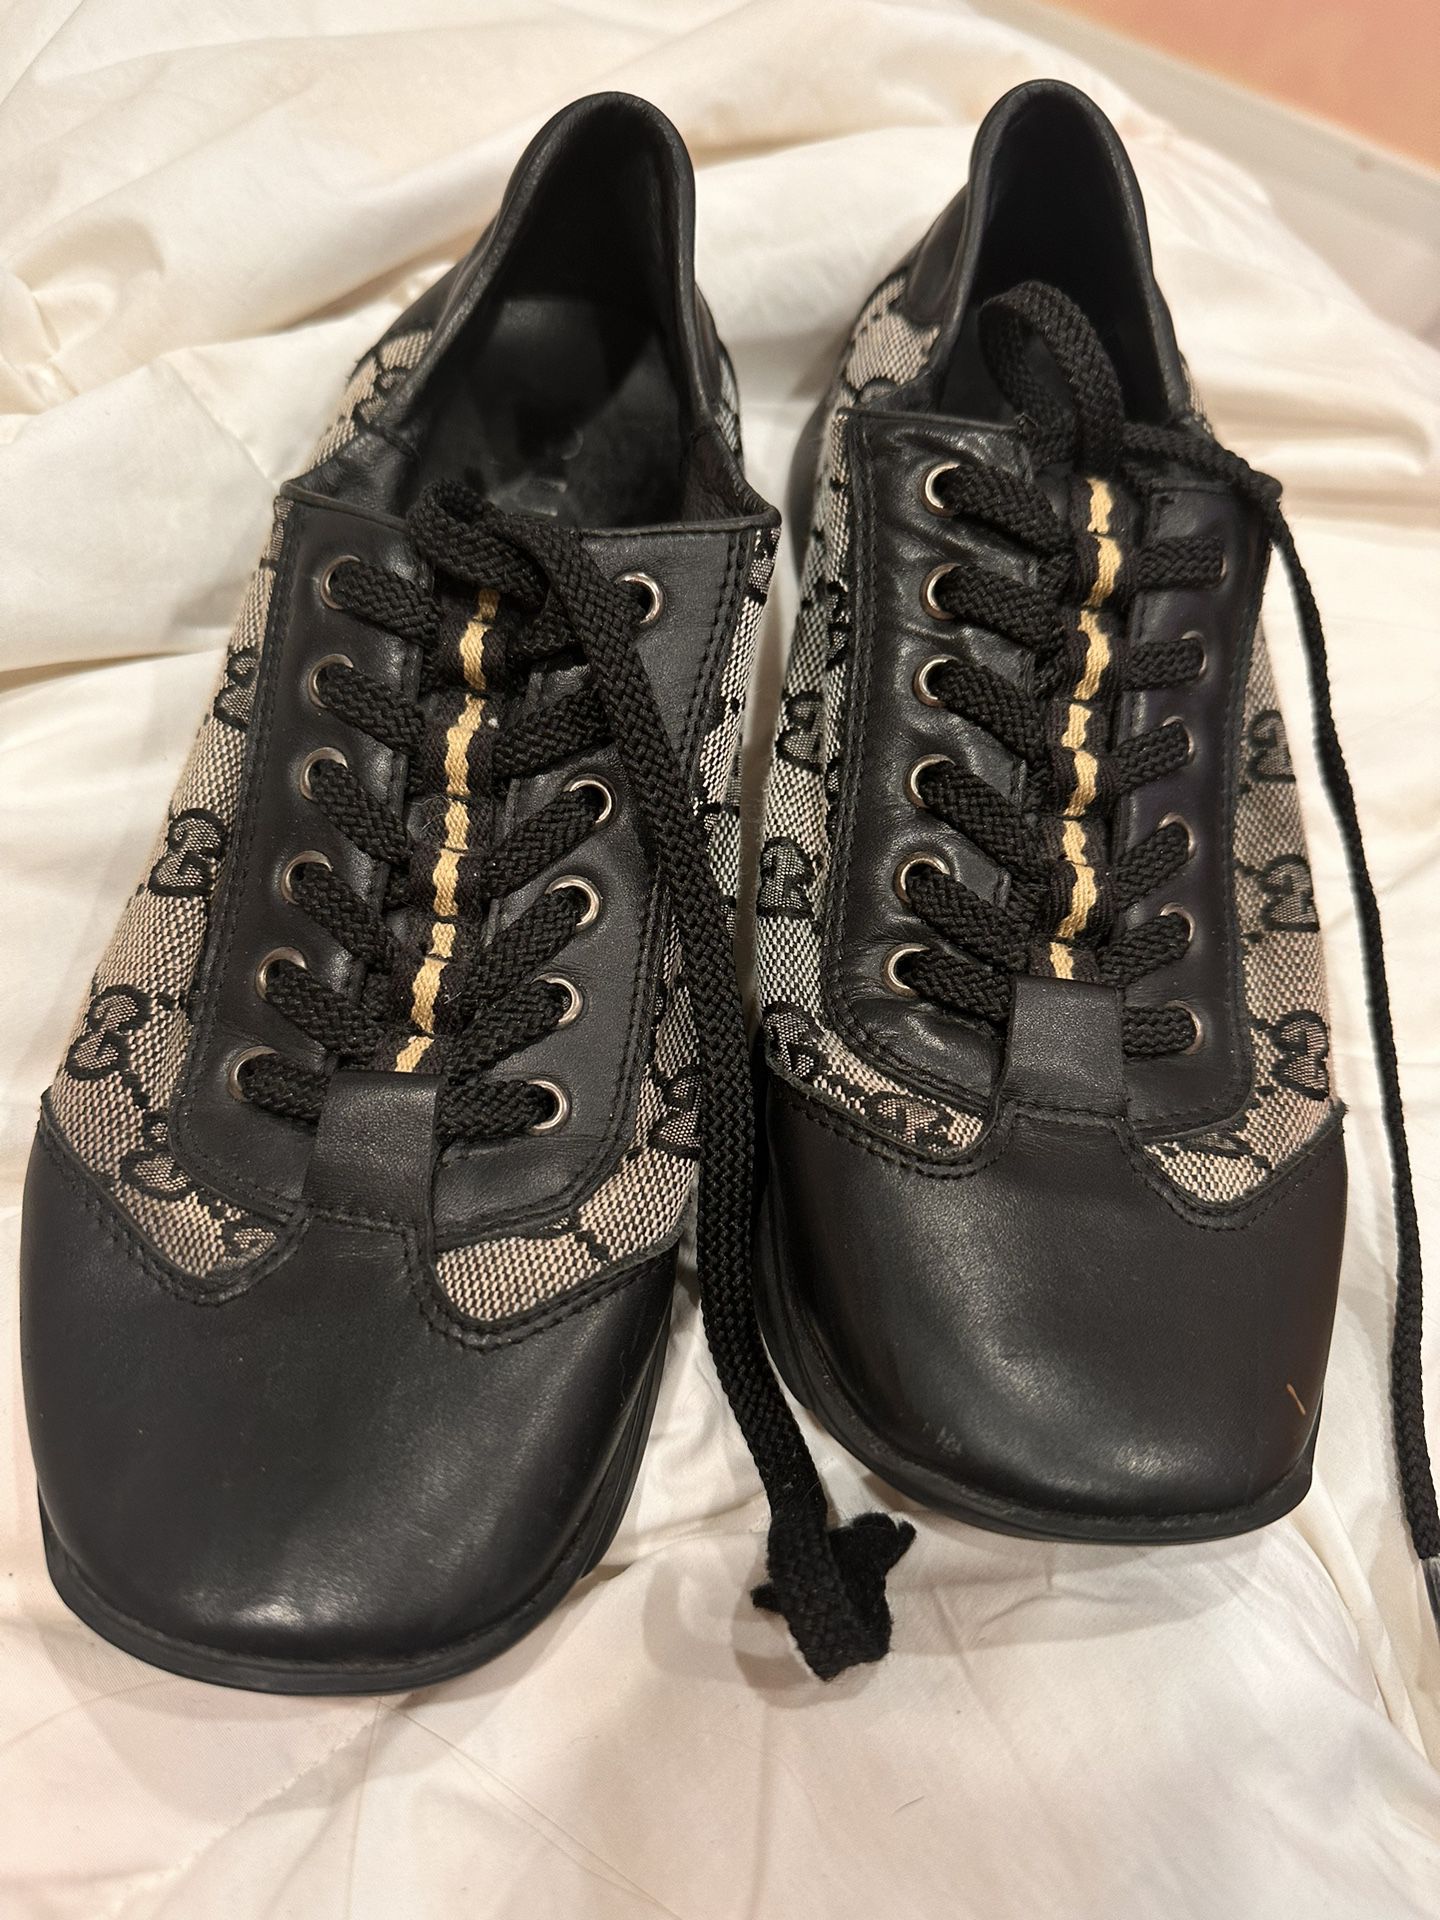 Gucci Beige/Black Coated Sneakers